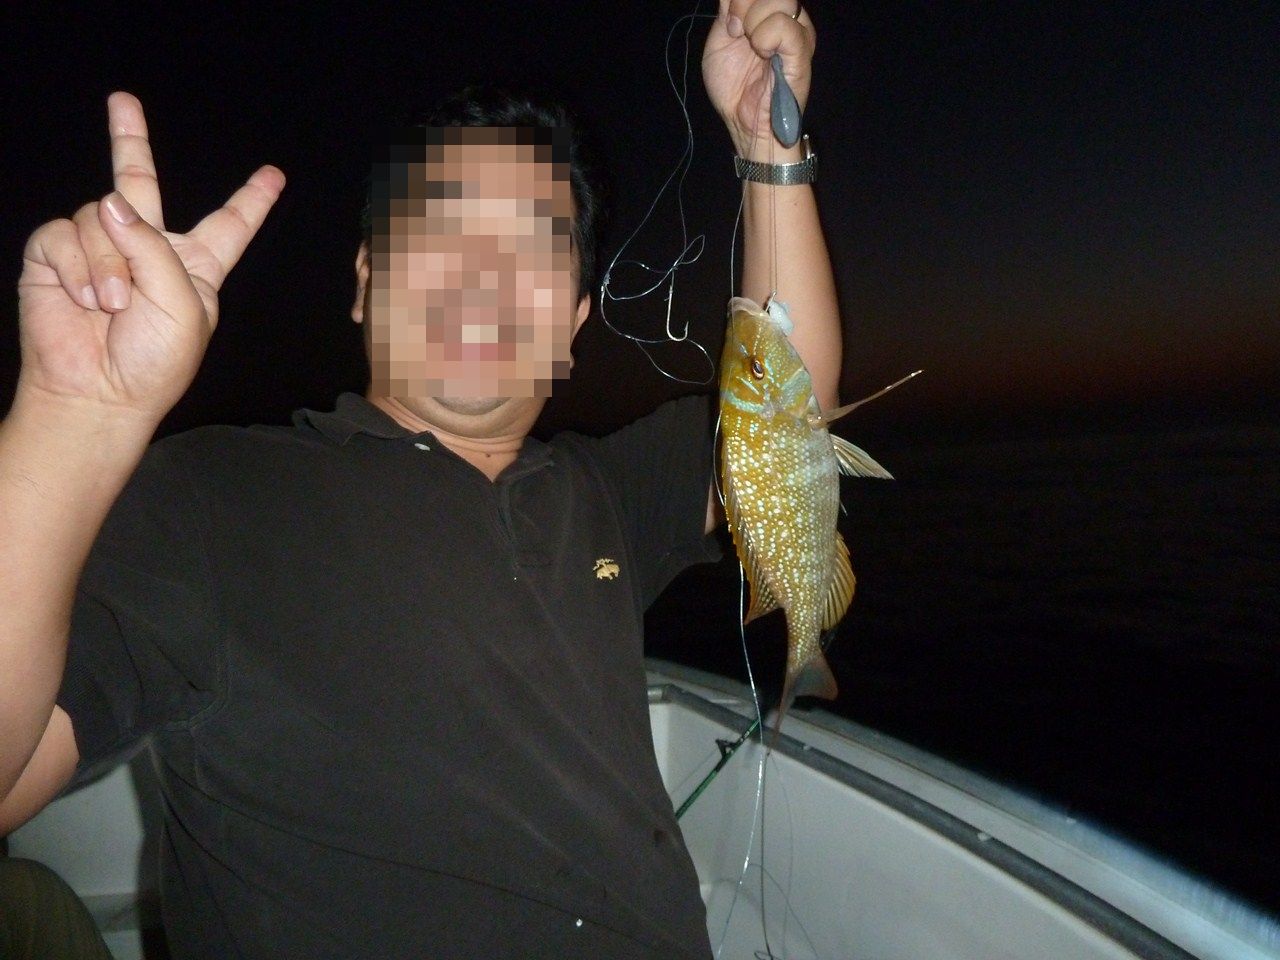 http://www.shintoko.jp/engblog/archives/images/2011/10/111028_qatarfishing929.jpg